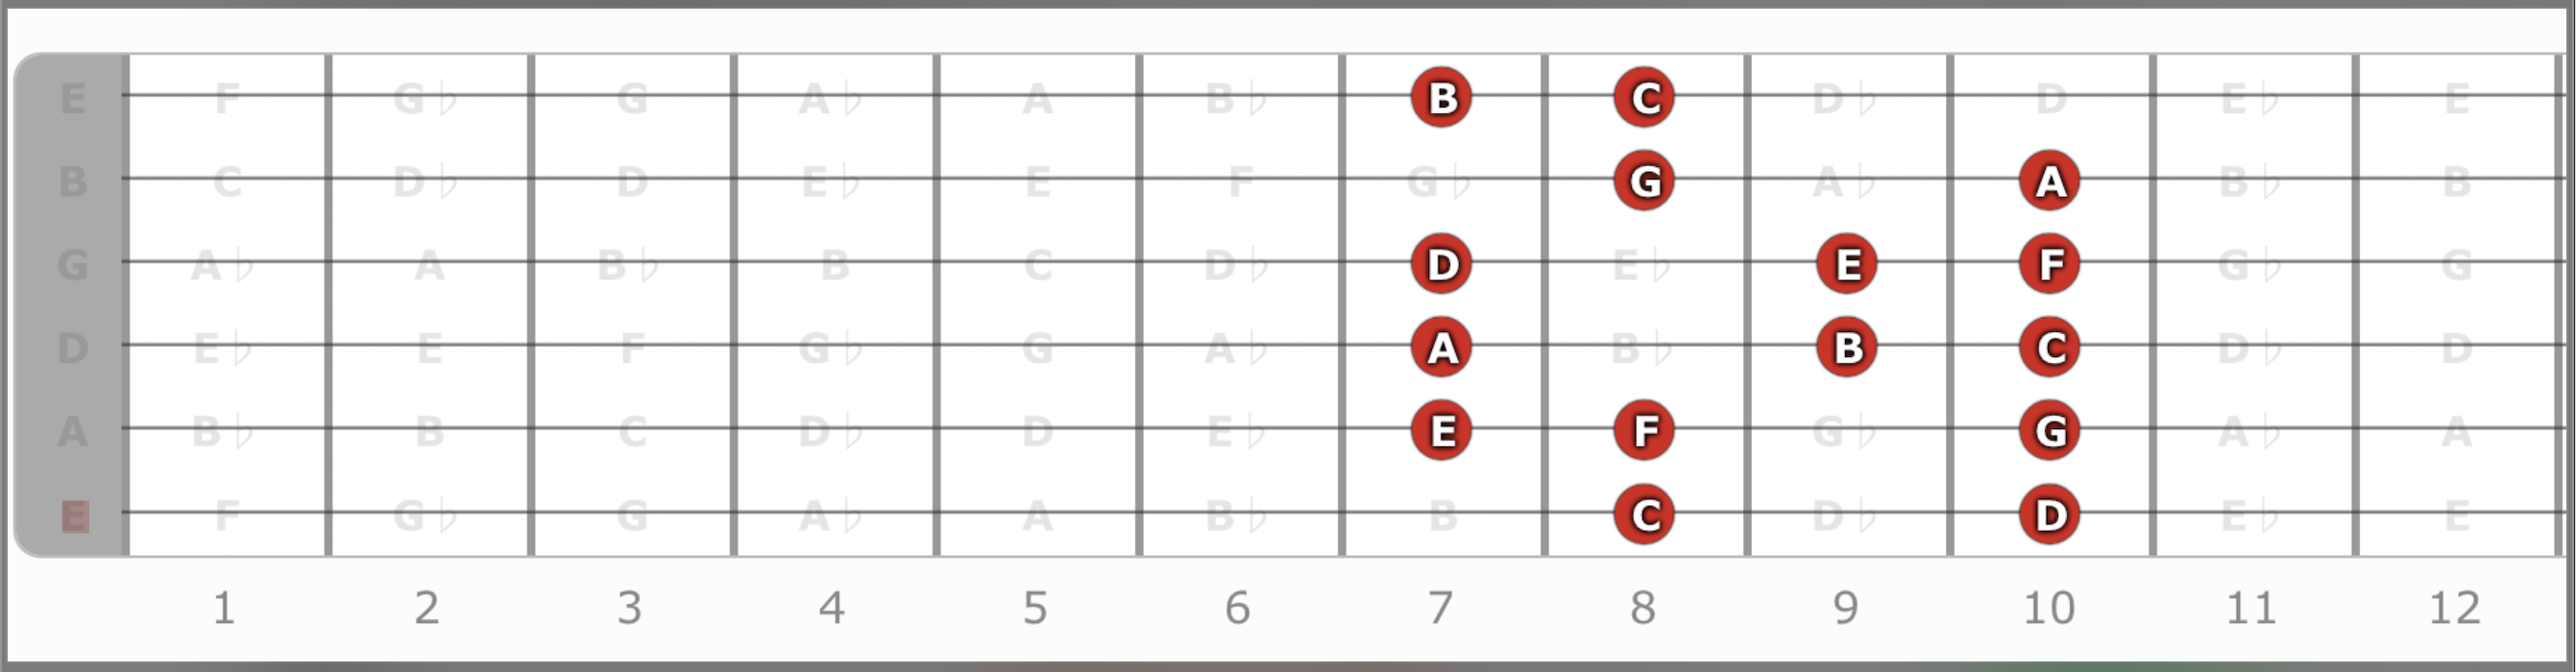 C Ionian or C major Guitar Fretboard Diagram